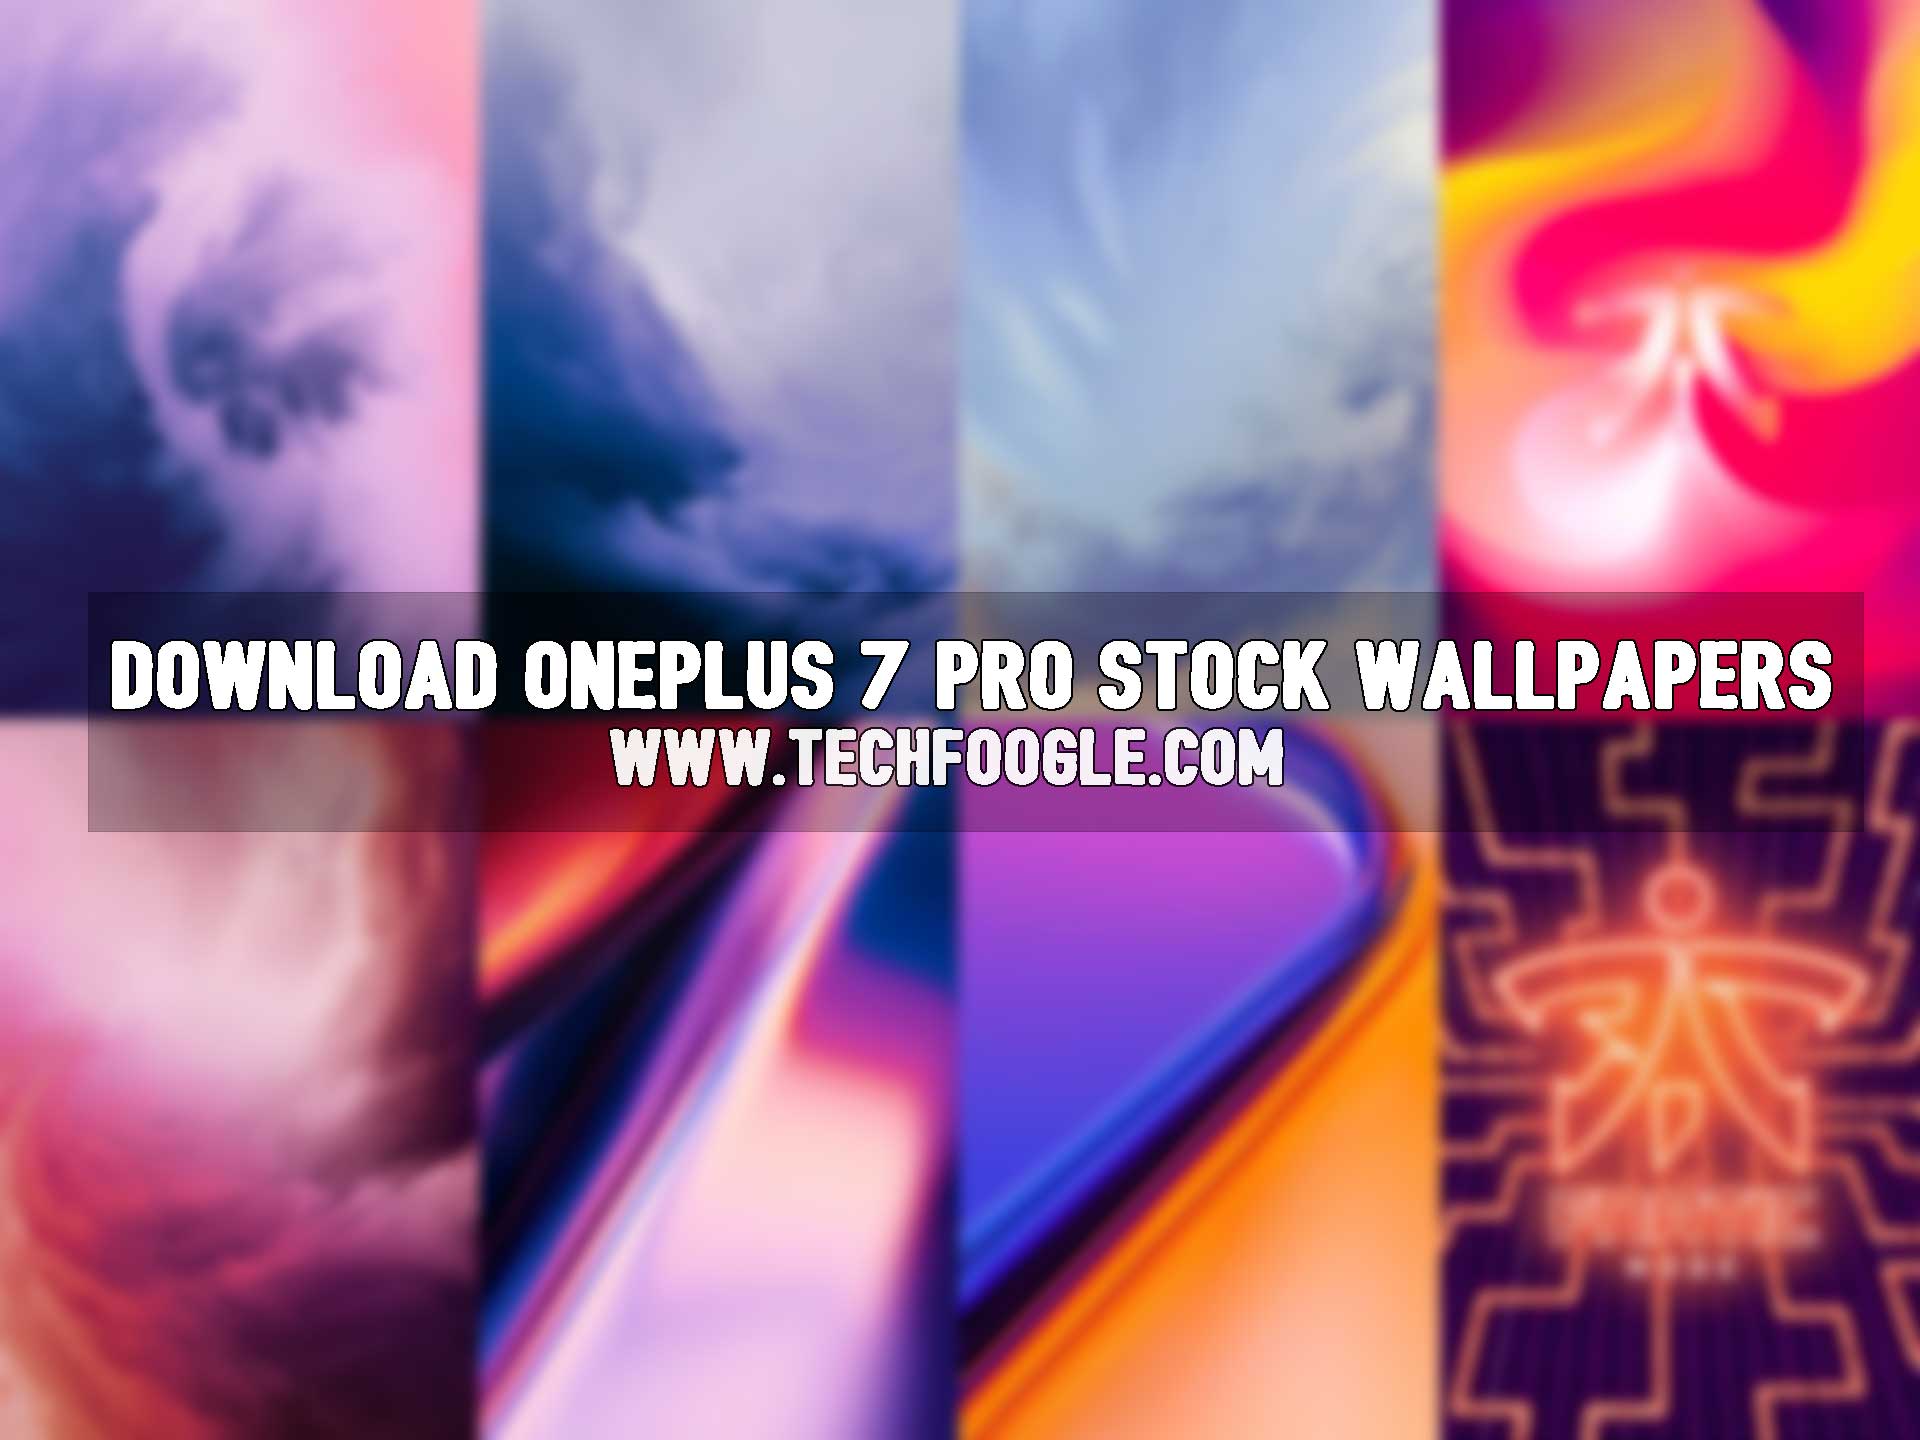 Free Download OnePlus 7 Pro Stock Wallpapers (4K) - TechFoogle